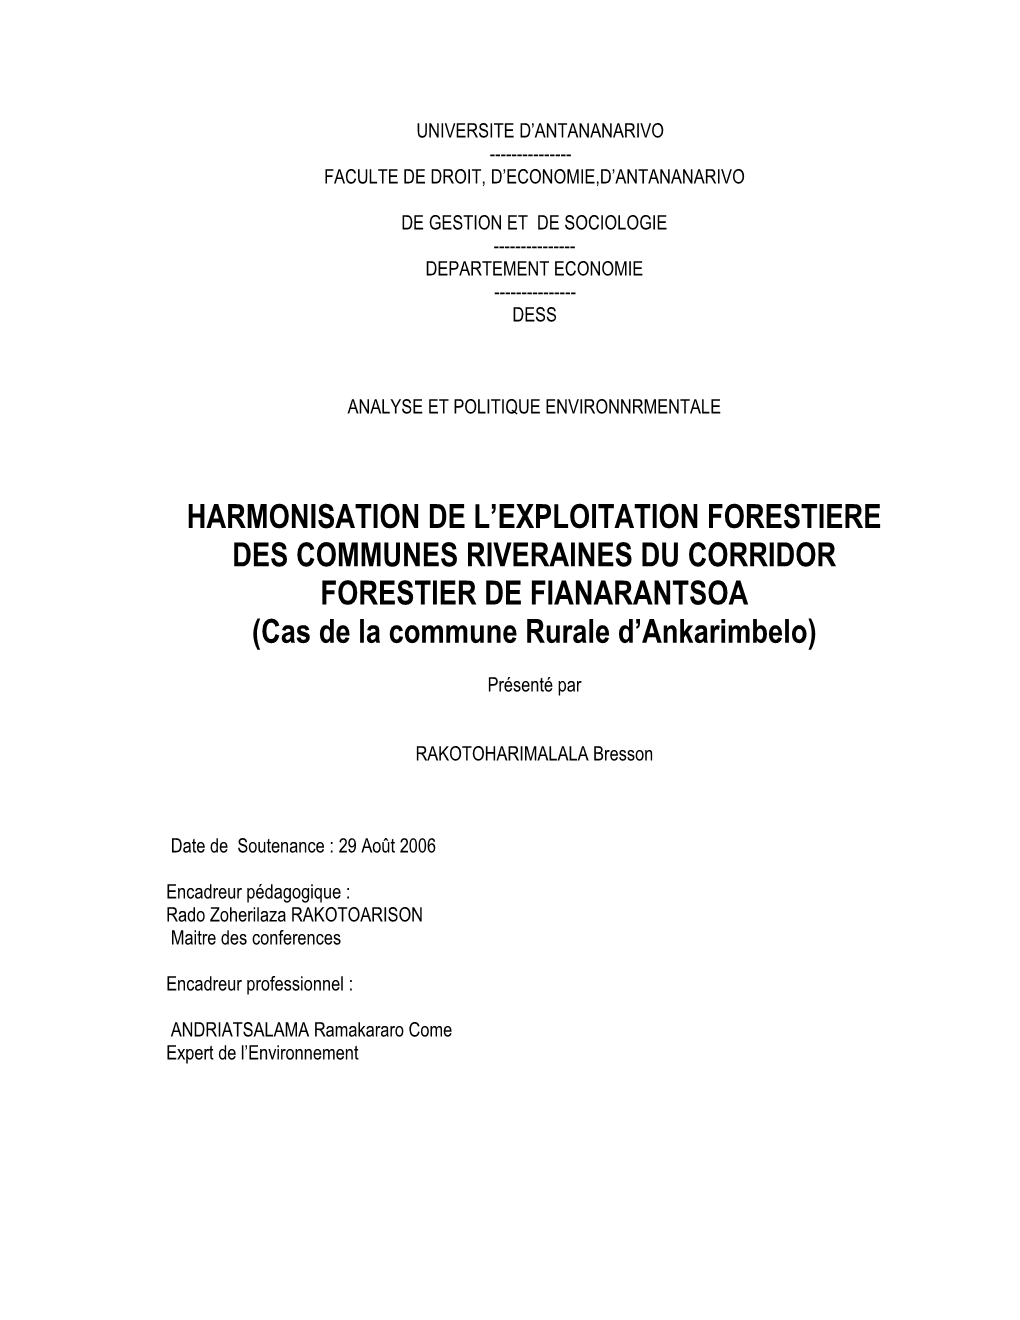 Harmonisation De L'exploitation Forestiere